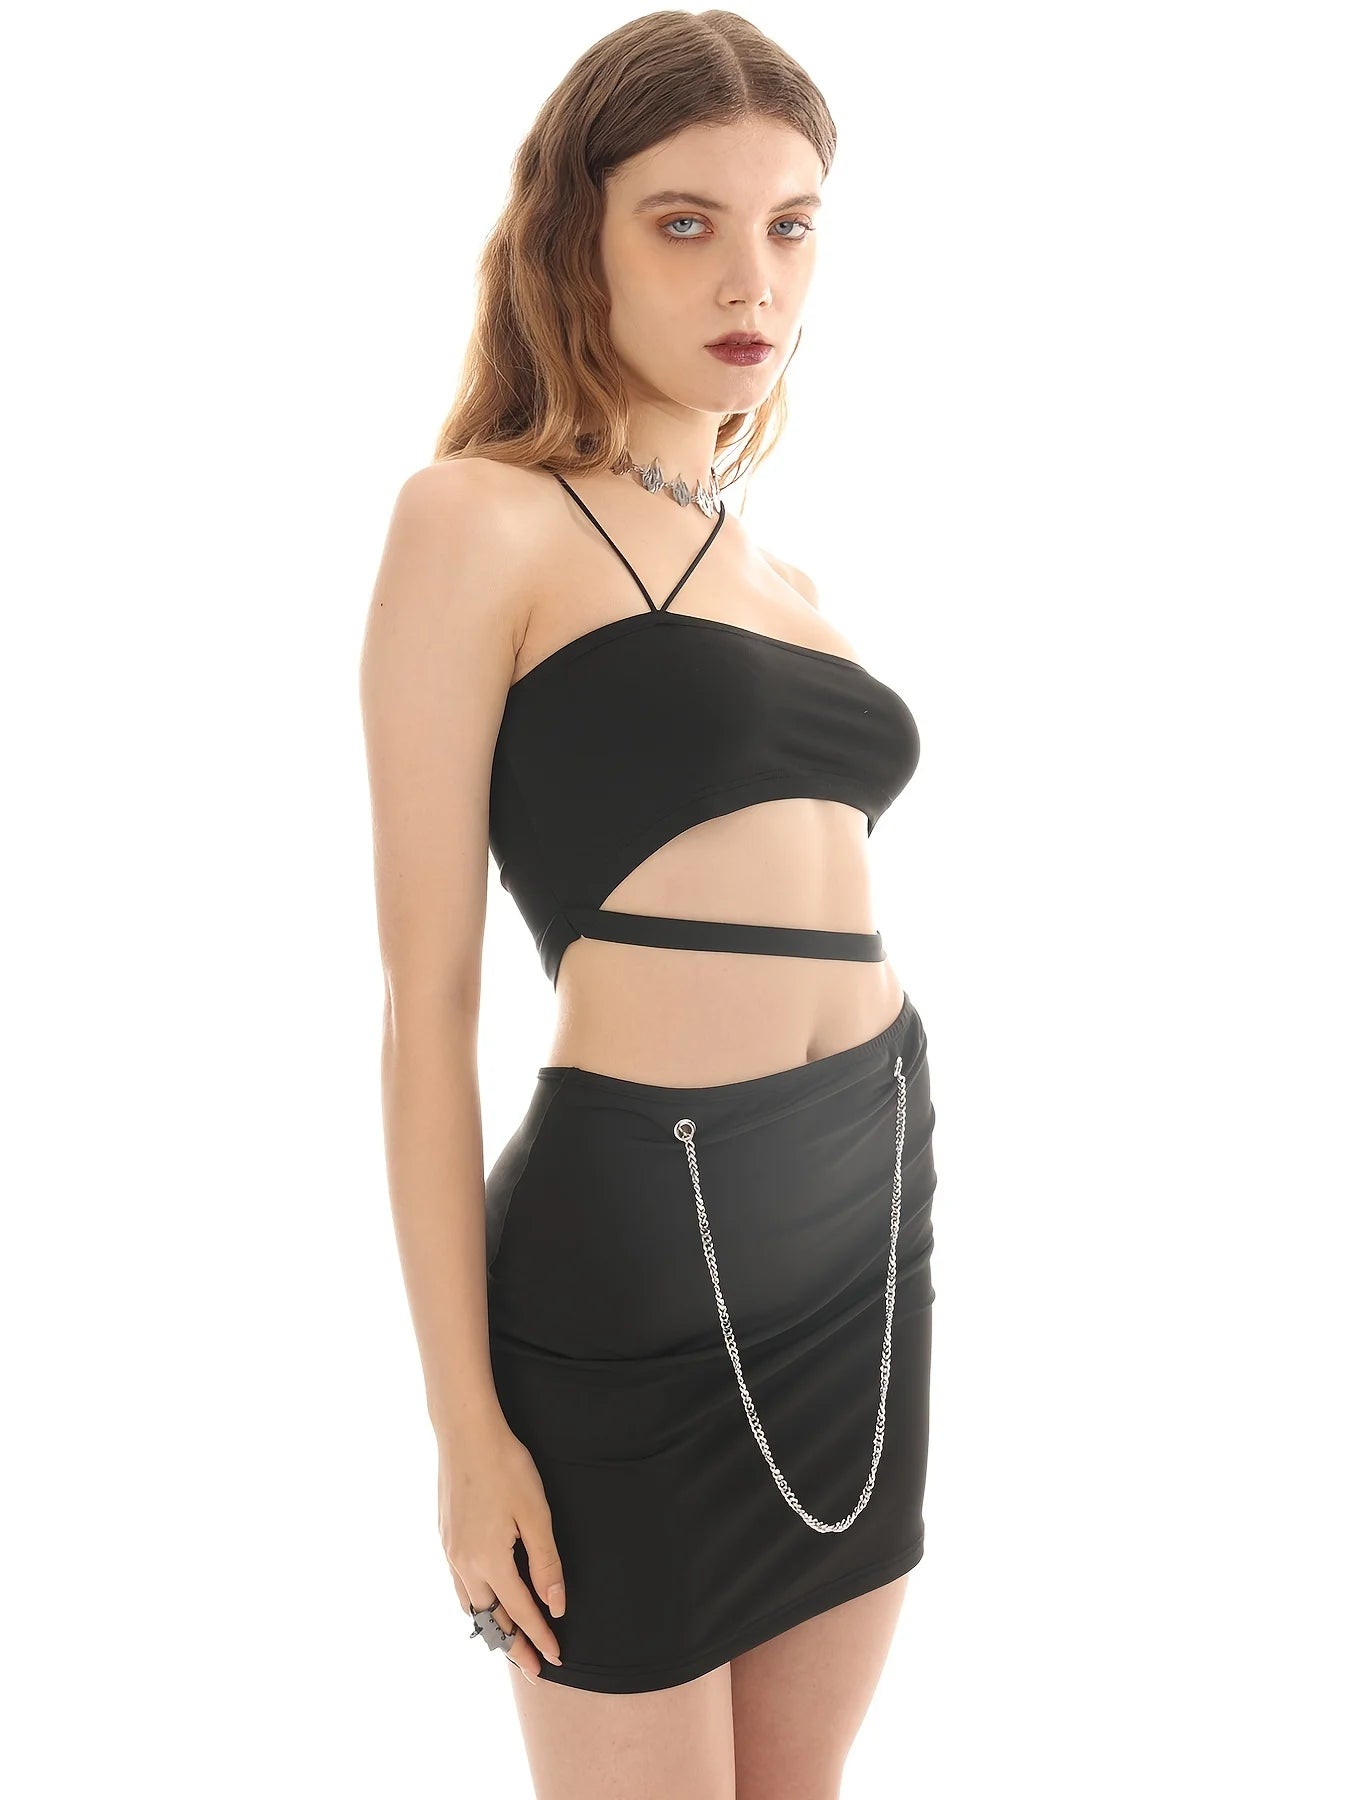  Summer Spring Women's Sexy Y2K Crop Tops Sleeveless Cami Plunge Tank Black Vest Tube Top